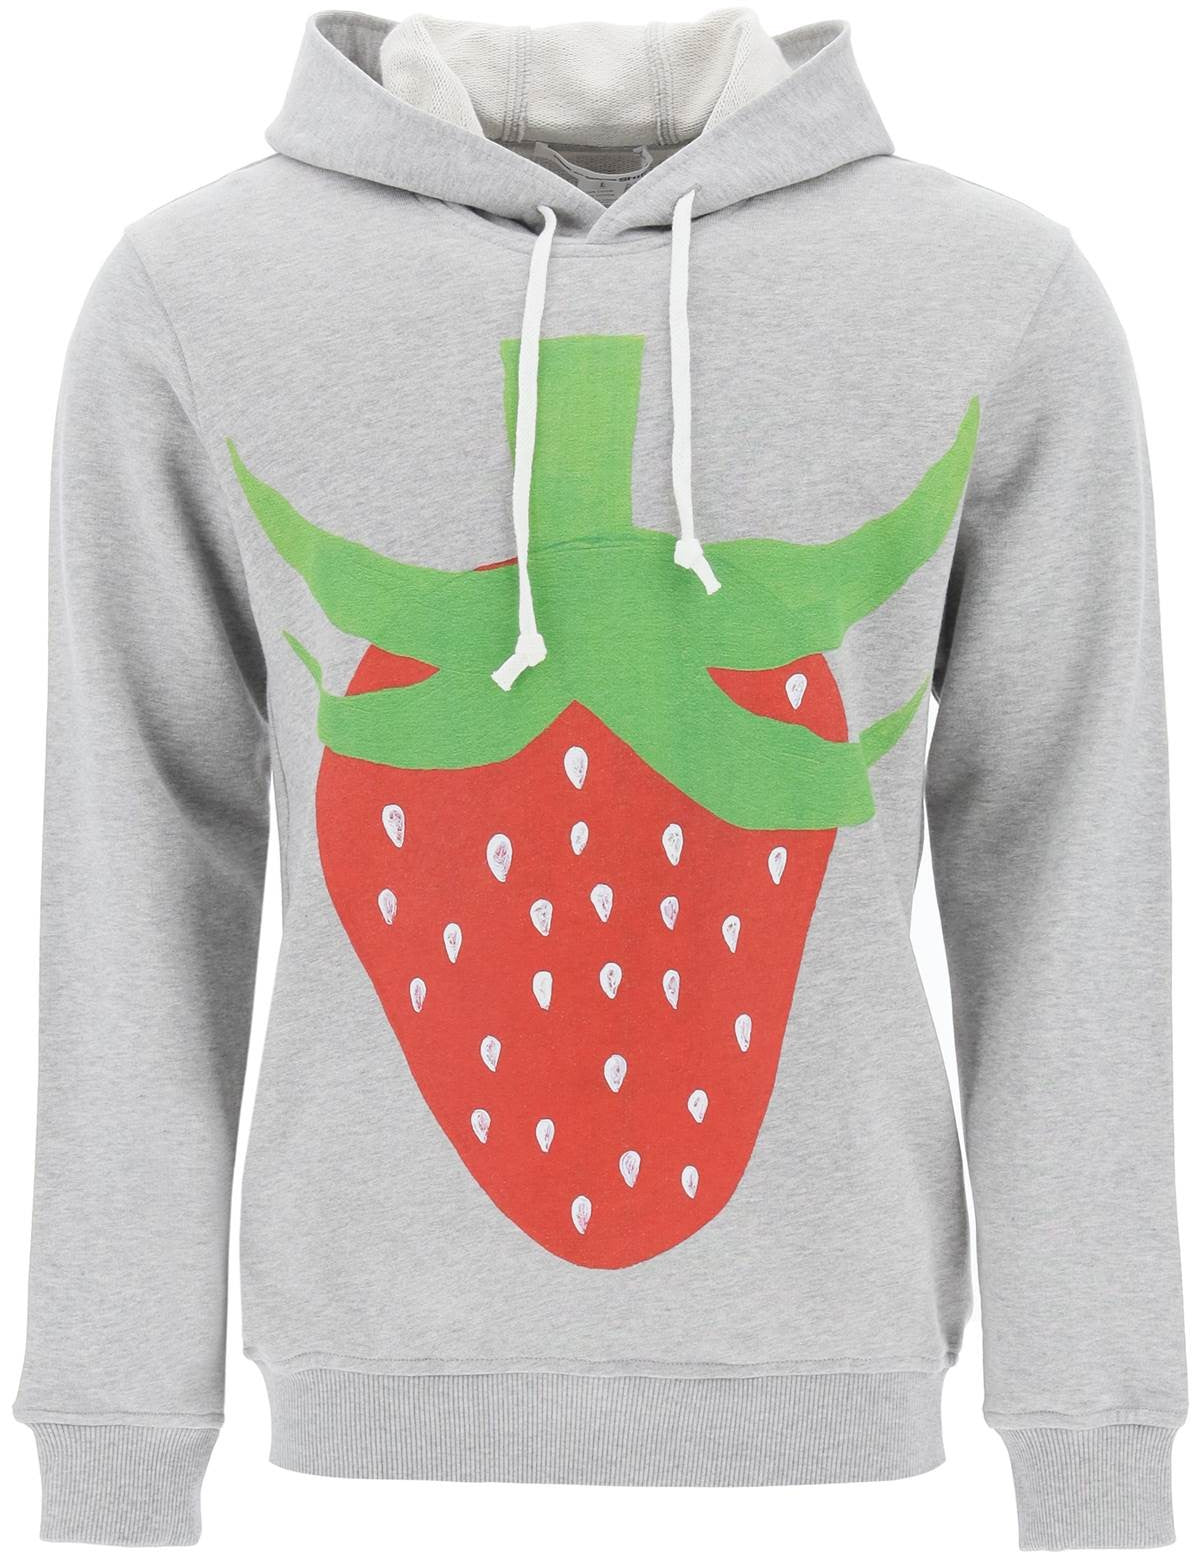 comme-des-garcons-shirt-strawberry-printed-hoodie.jpg